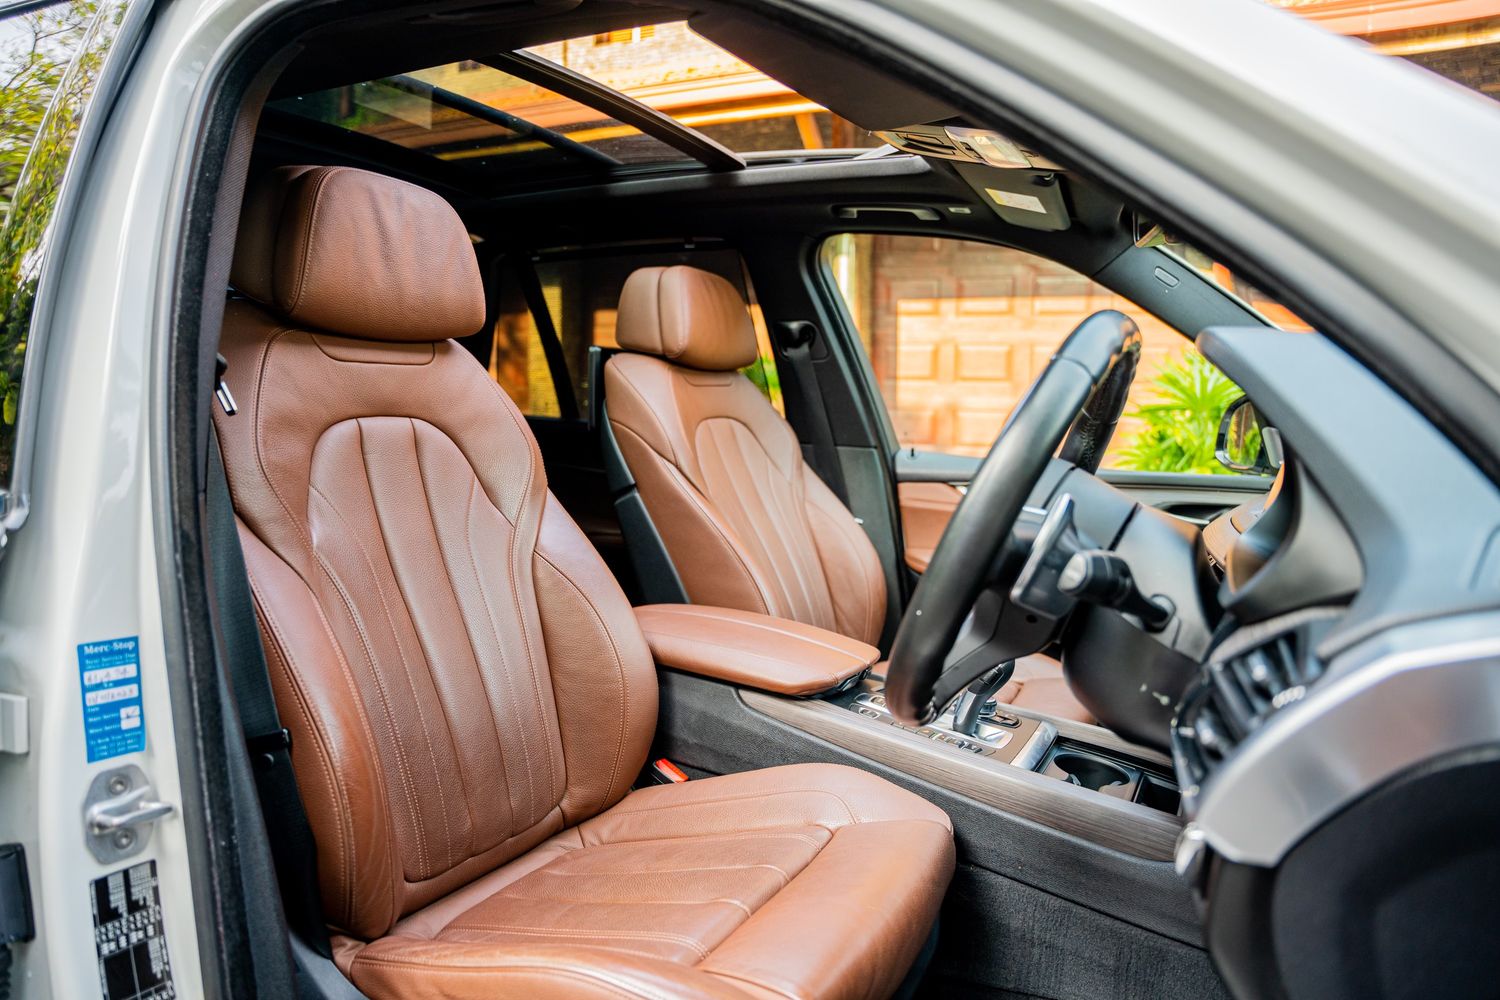 BMW X5 front interior